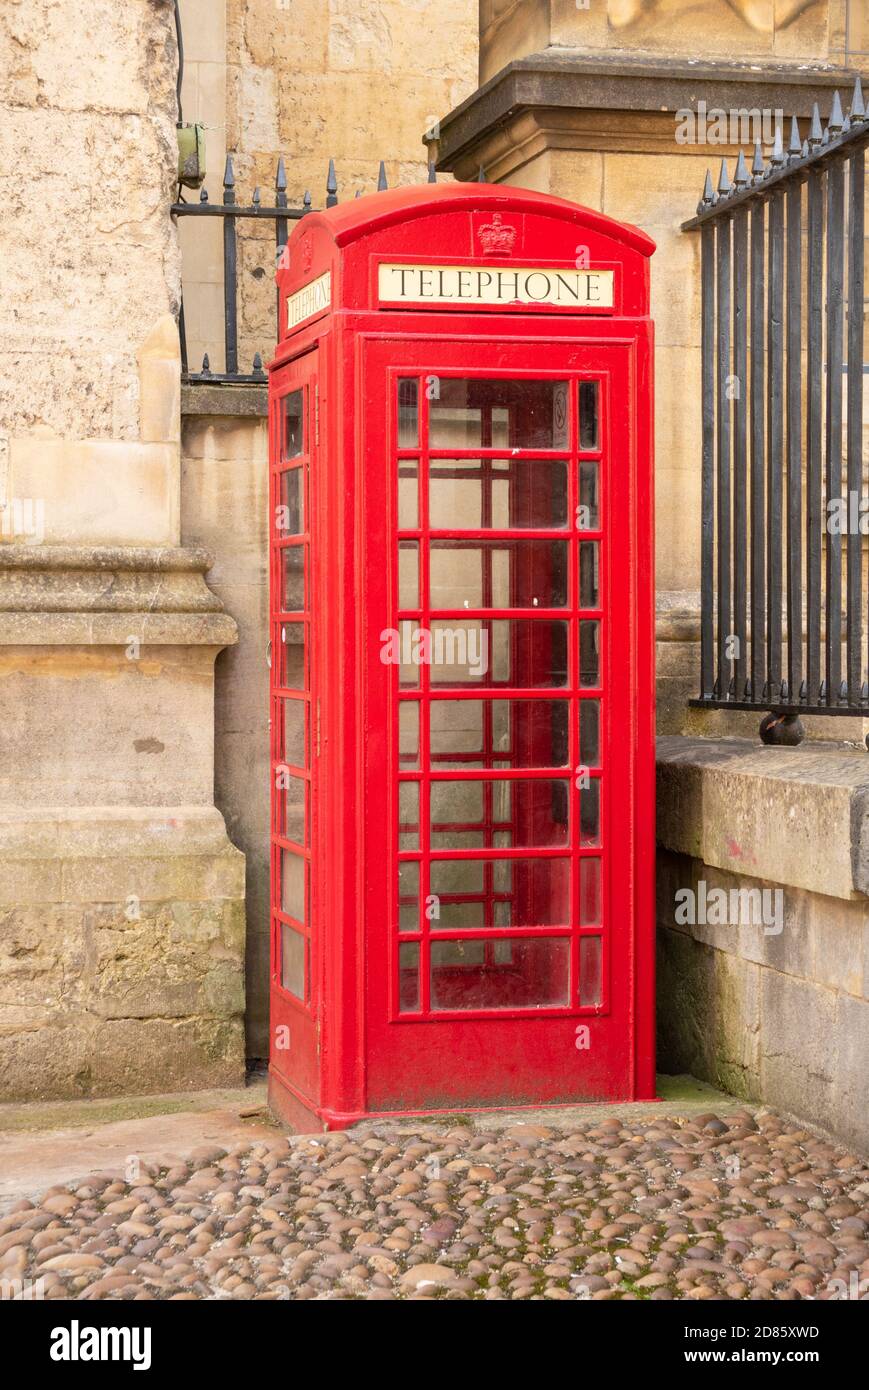 Rote Telefonzelle, roter Telefonkiosk, Oxford Oxfordshire England GB Europa Stockfoto